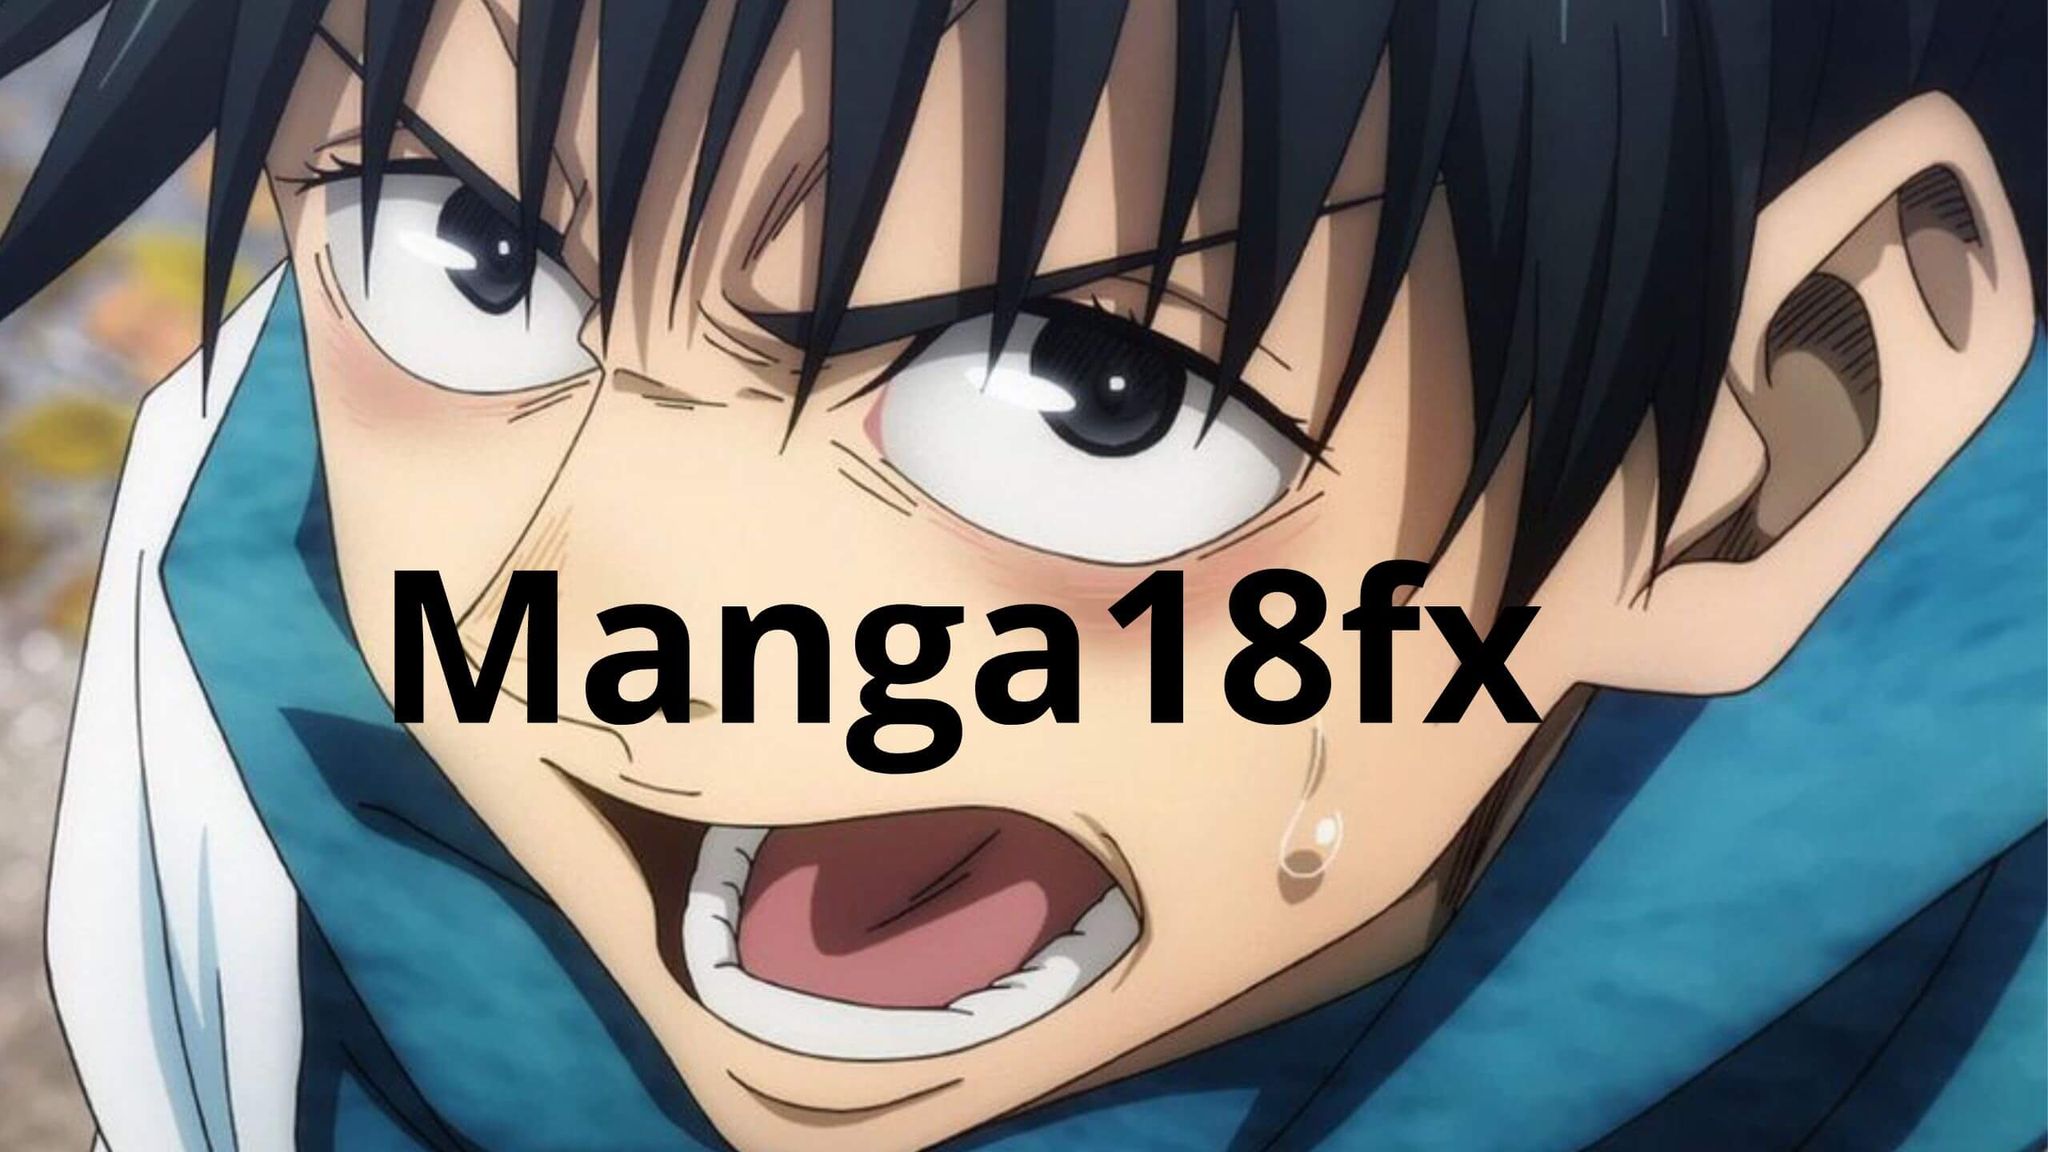 Manga18fx The World’s Largest Digital Manga